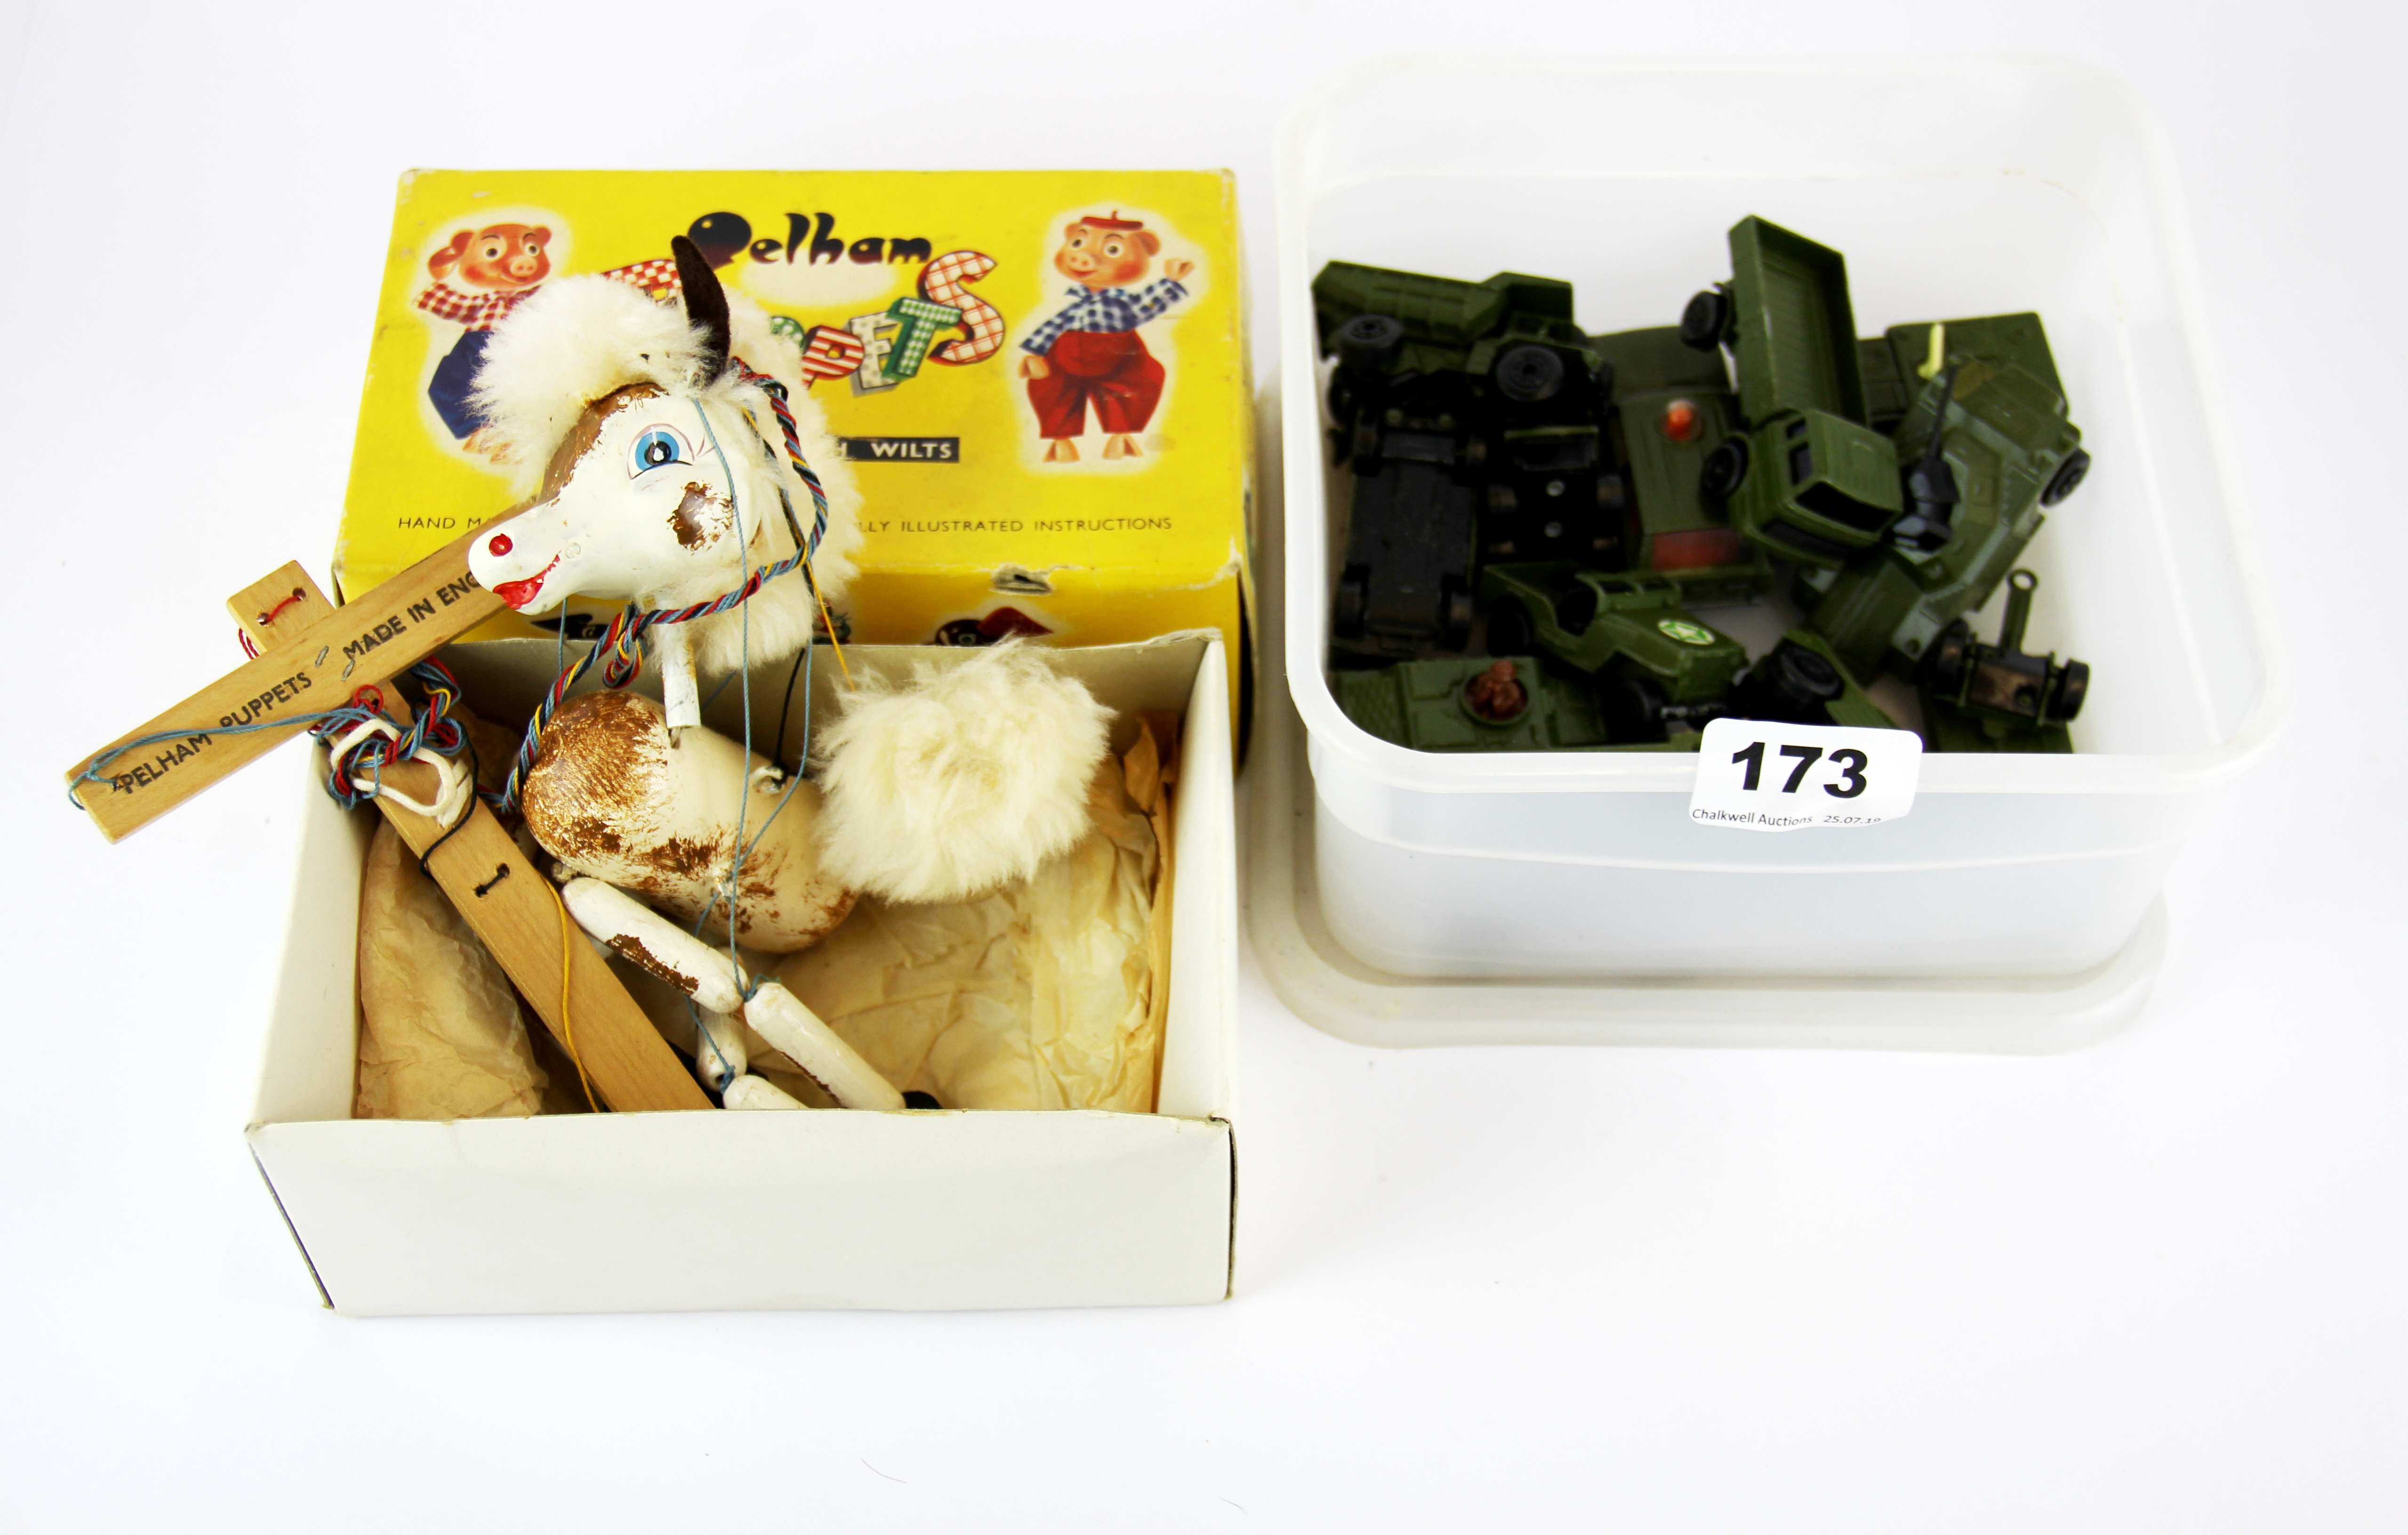 A quantity of Matchbox diecast military vehicles and a Pelham puppet.